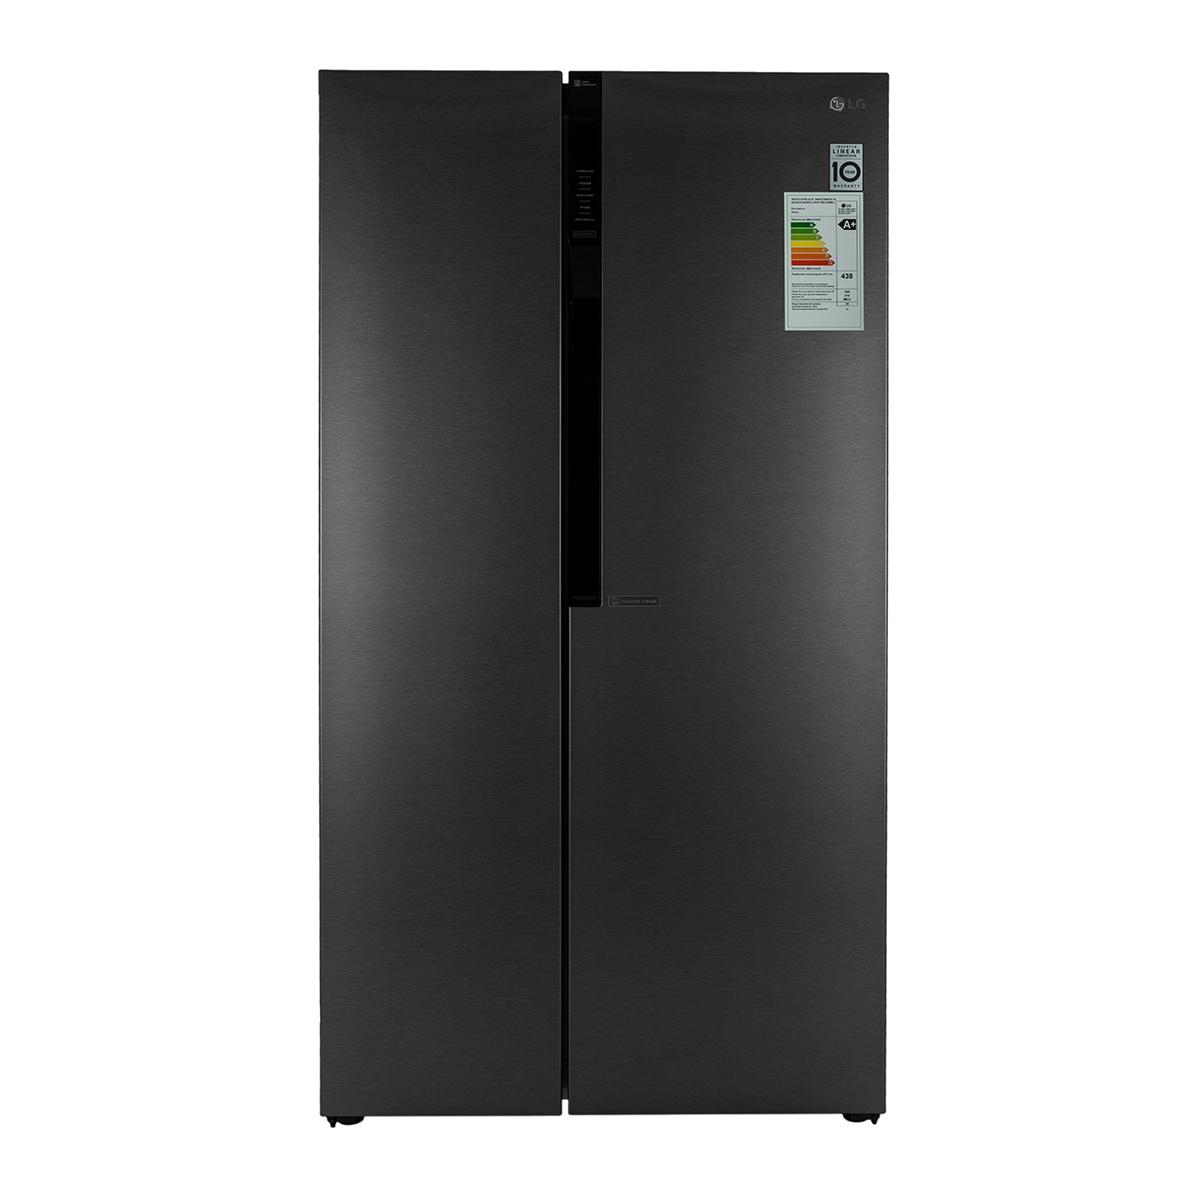 Холодильник side by side lg gc. Холодильник (Side-by-Side) LG GC-b247jldv. Холодильник LG GC-b247jldv Silver. Холодильник Side by Side LG GC-b247jldv серебристый. Холодильник LG GC-b247jldv, графитовый.